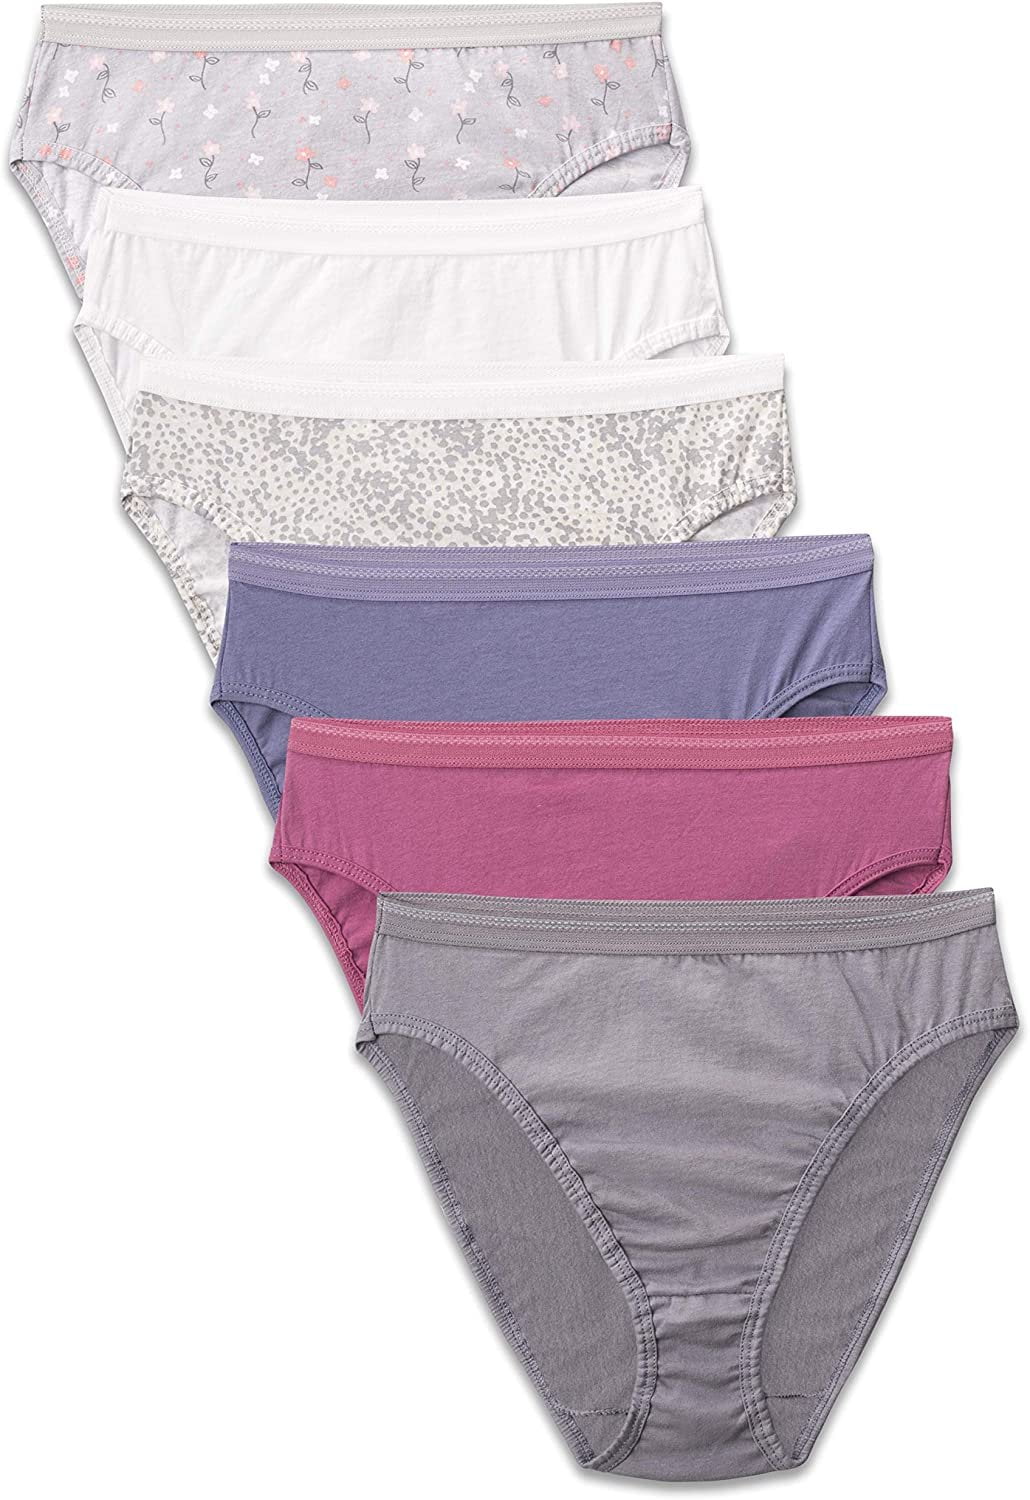 Hanes Women's nylon hi-cut panties - 6 pack 